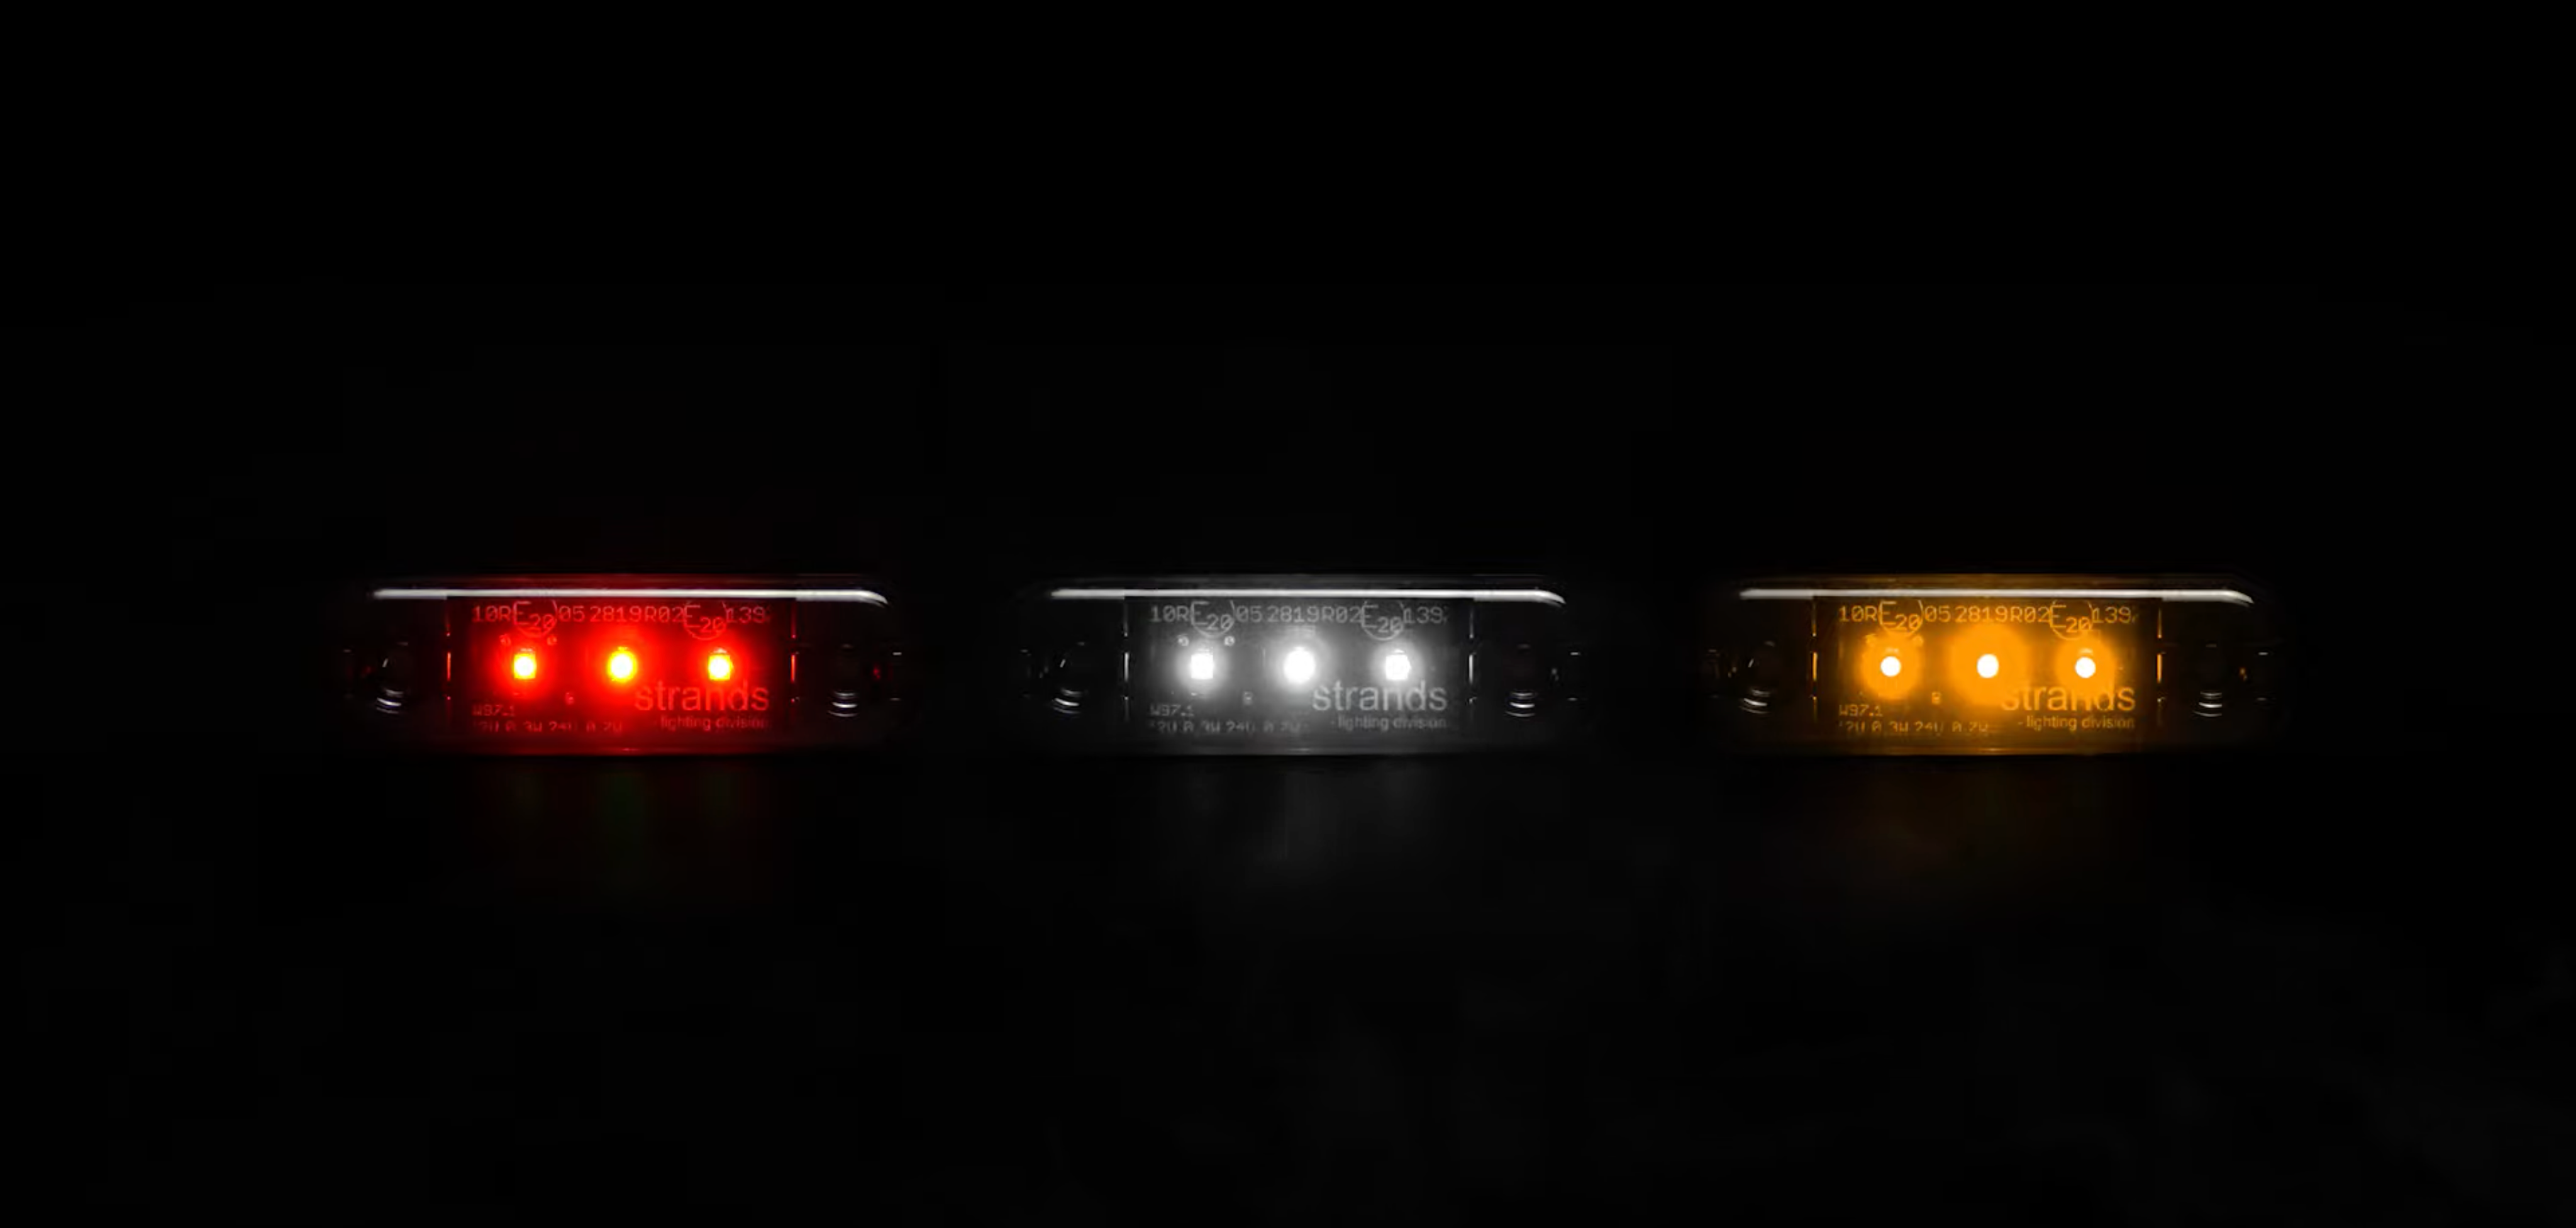 Strands Dark Knight Slim markeringslys / 3 LED - spo-cs-deaktiveret - spo-standard - spo-aktiveret - spo-notify-me-deaktiveret